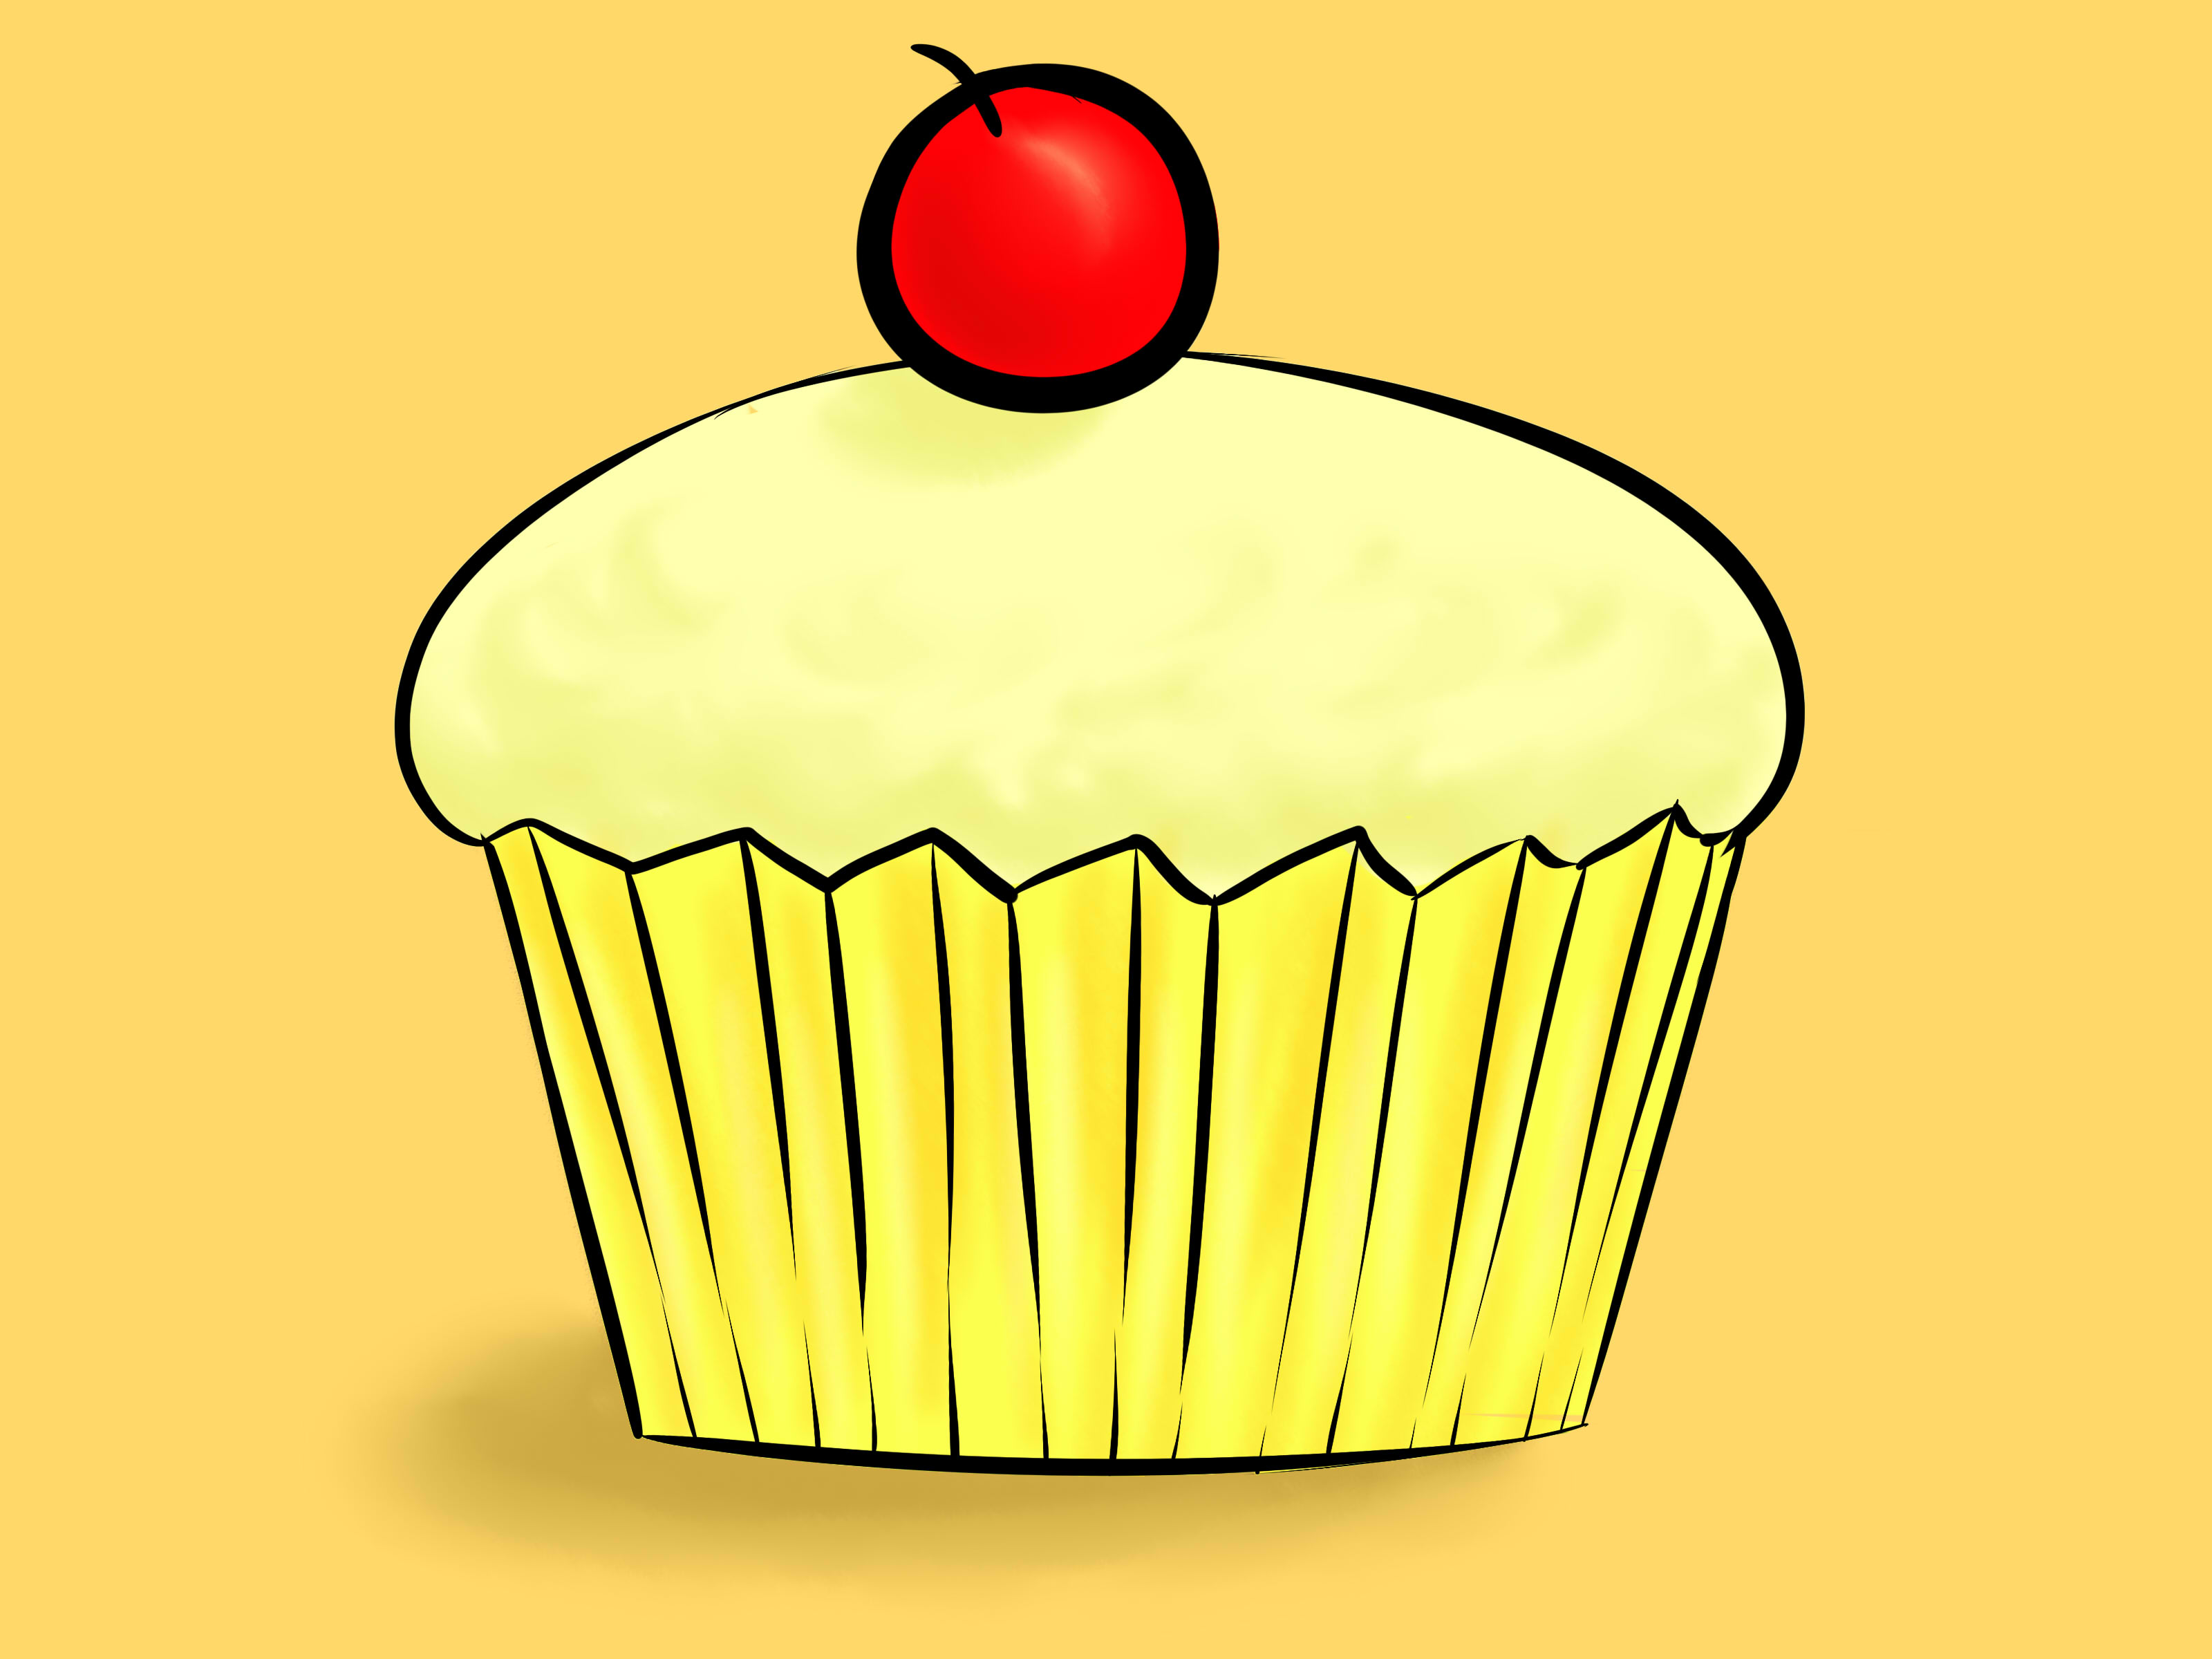 Draw Cupcake Cartoon images